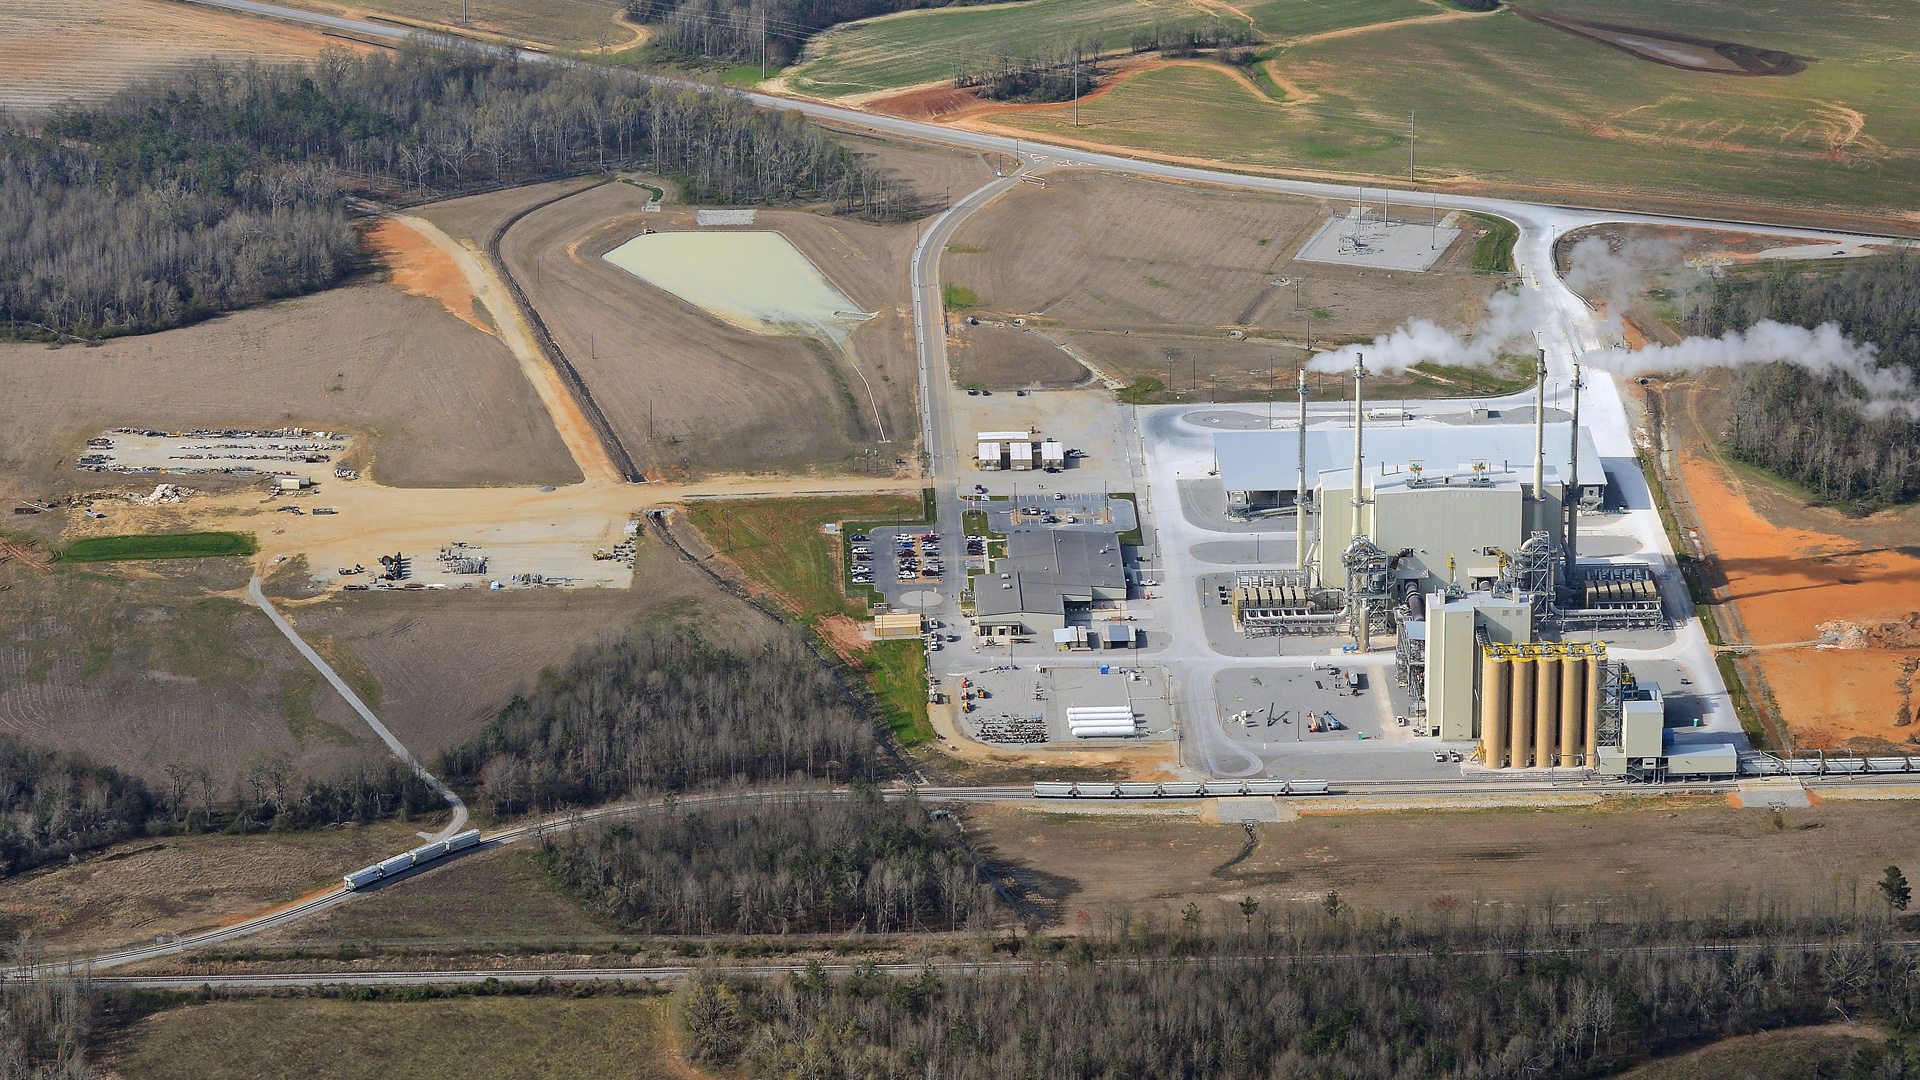 US Ceramics, LLC Manufacturing facility in Wrens, GA. Aerial closeup view